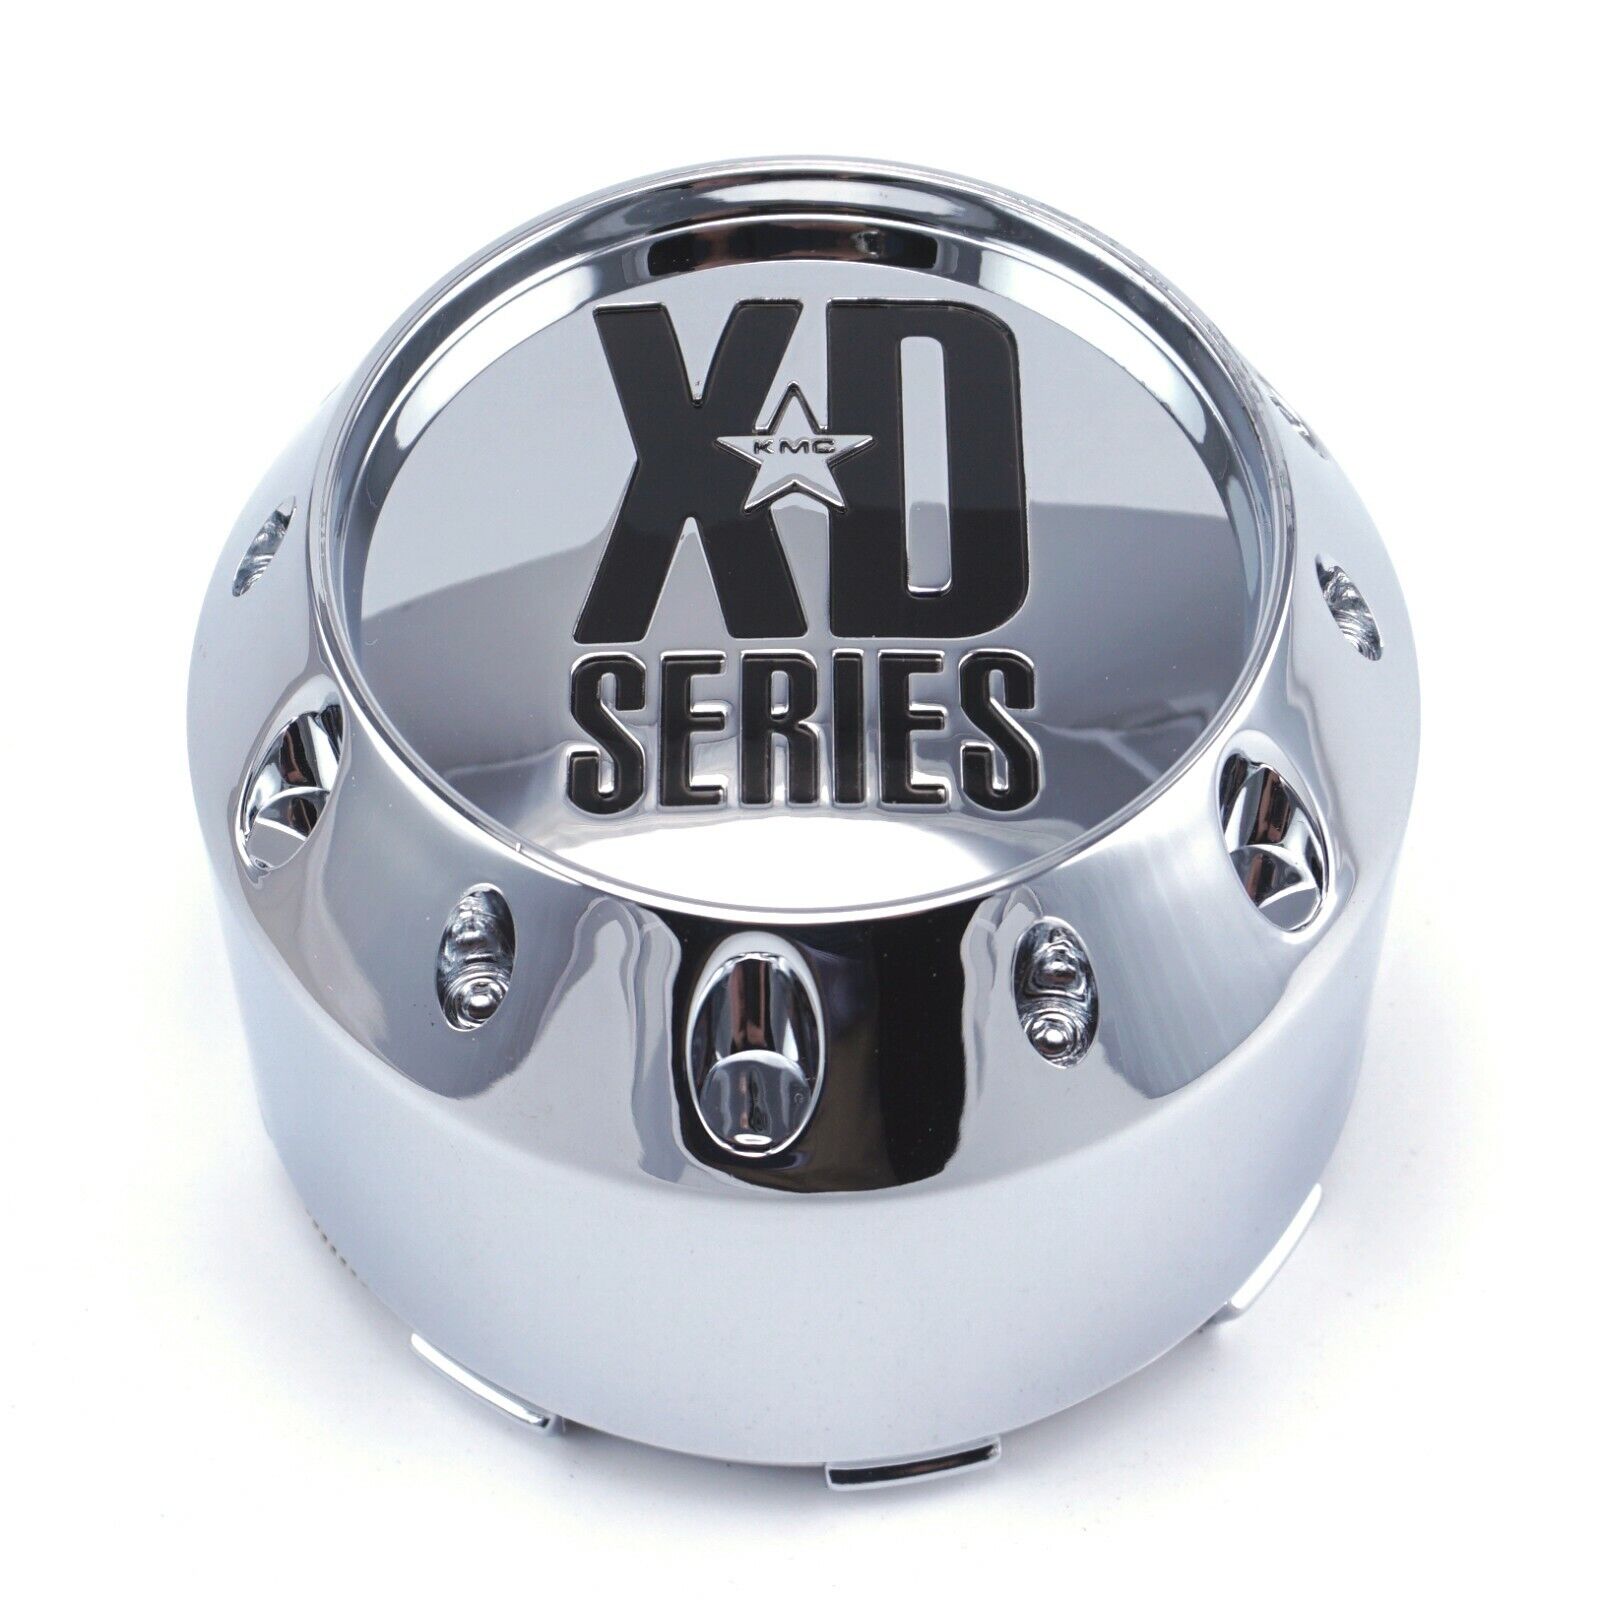 NEW XD Series 464K106 905K106 Chrome Wheel Center Cap 5 / 6 Lug XD779 XD795